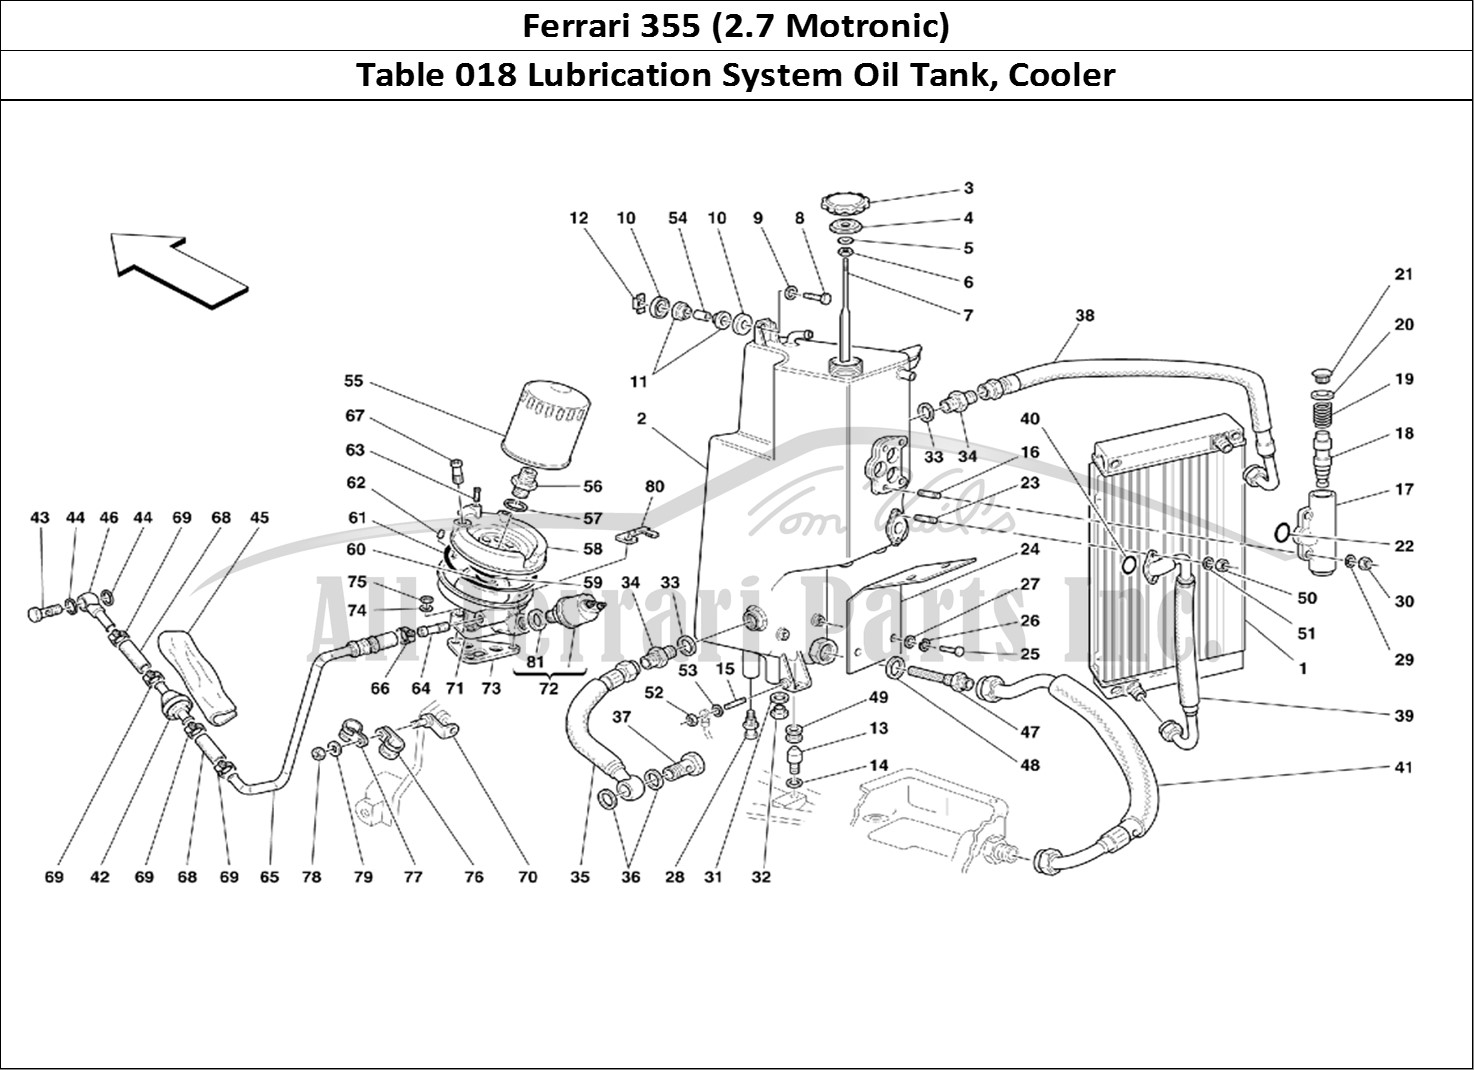 Ferrari Parts Ferrari 355 (2.7 Motronic) Page 018 Lubrication System